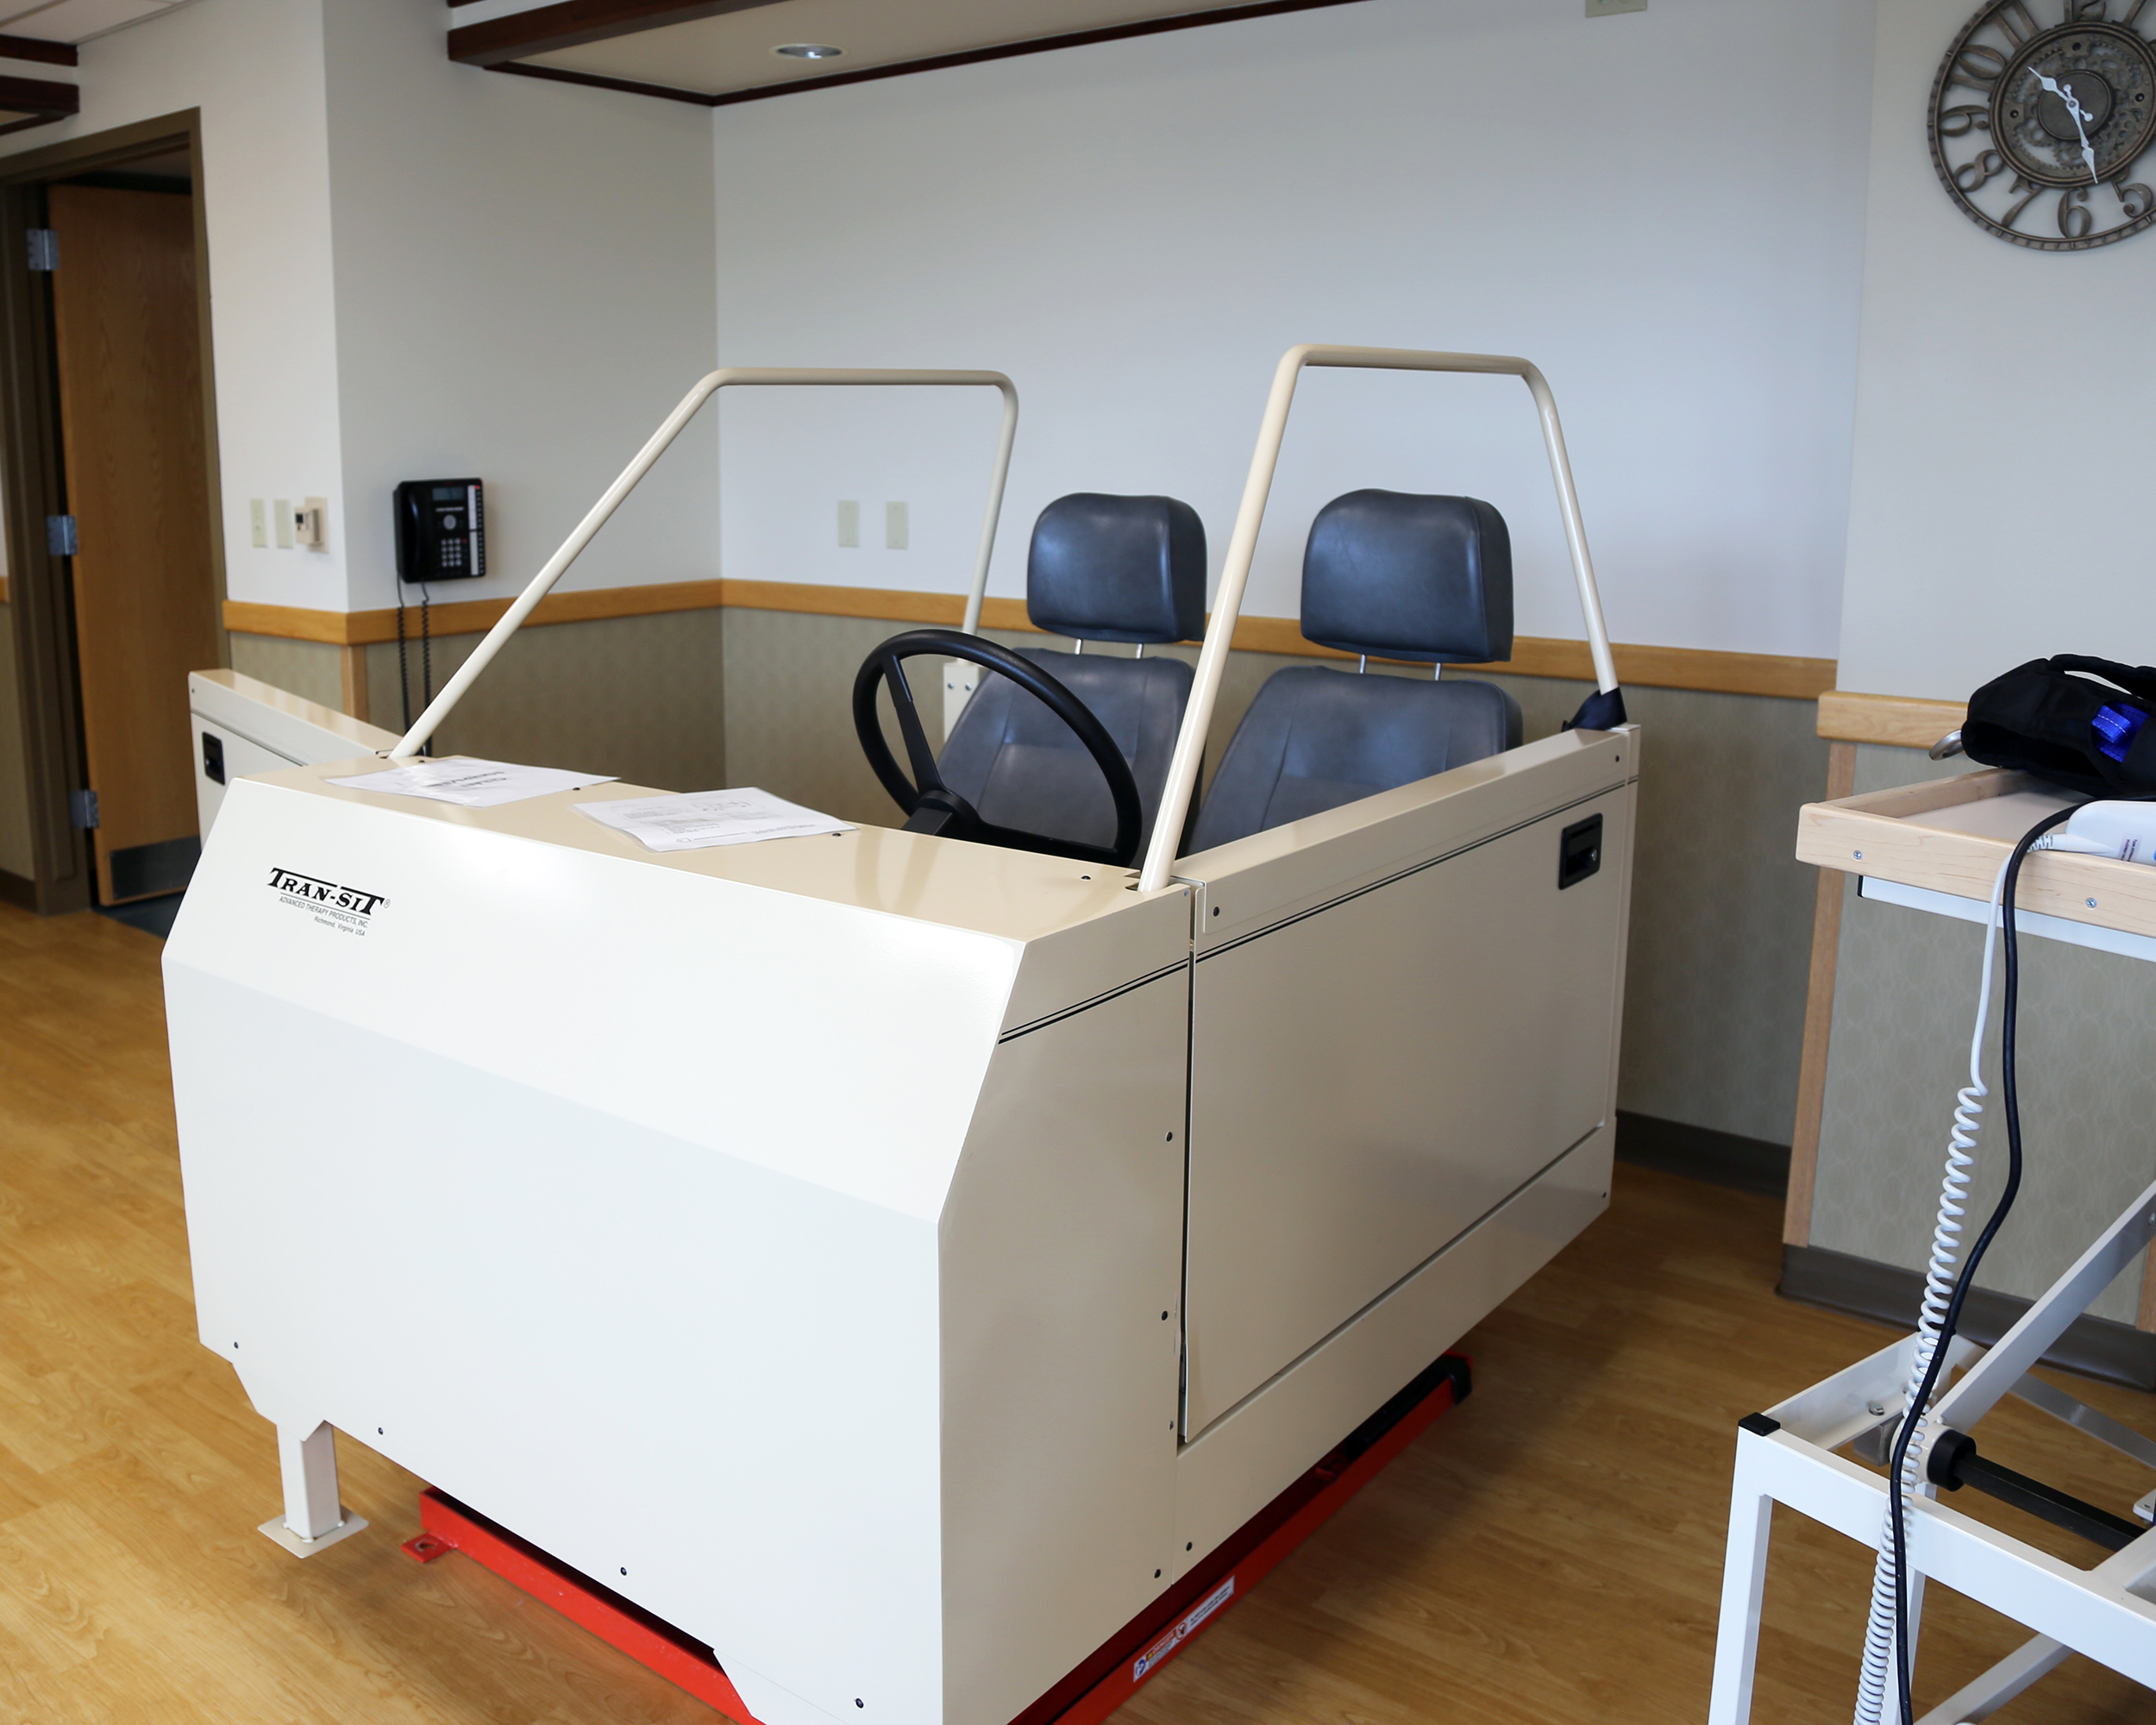 Car simulator for rehab patients